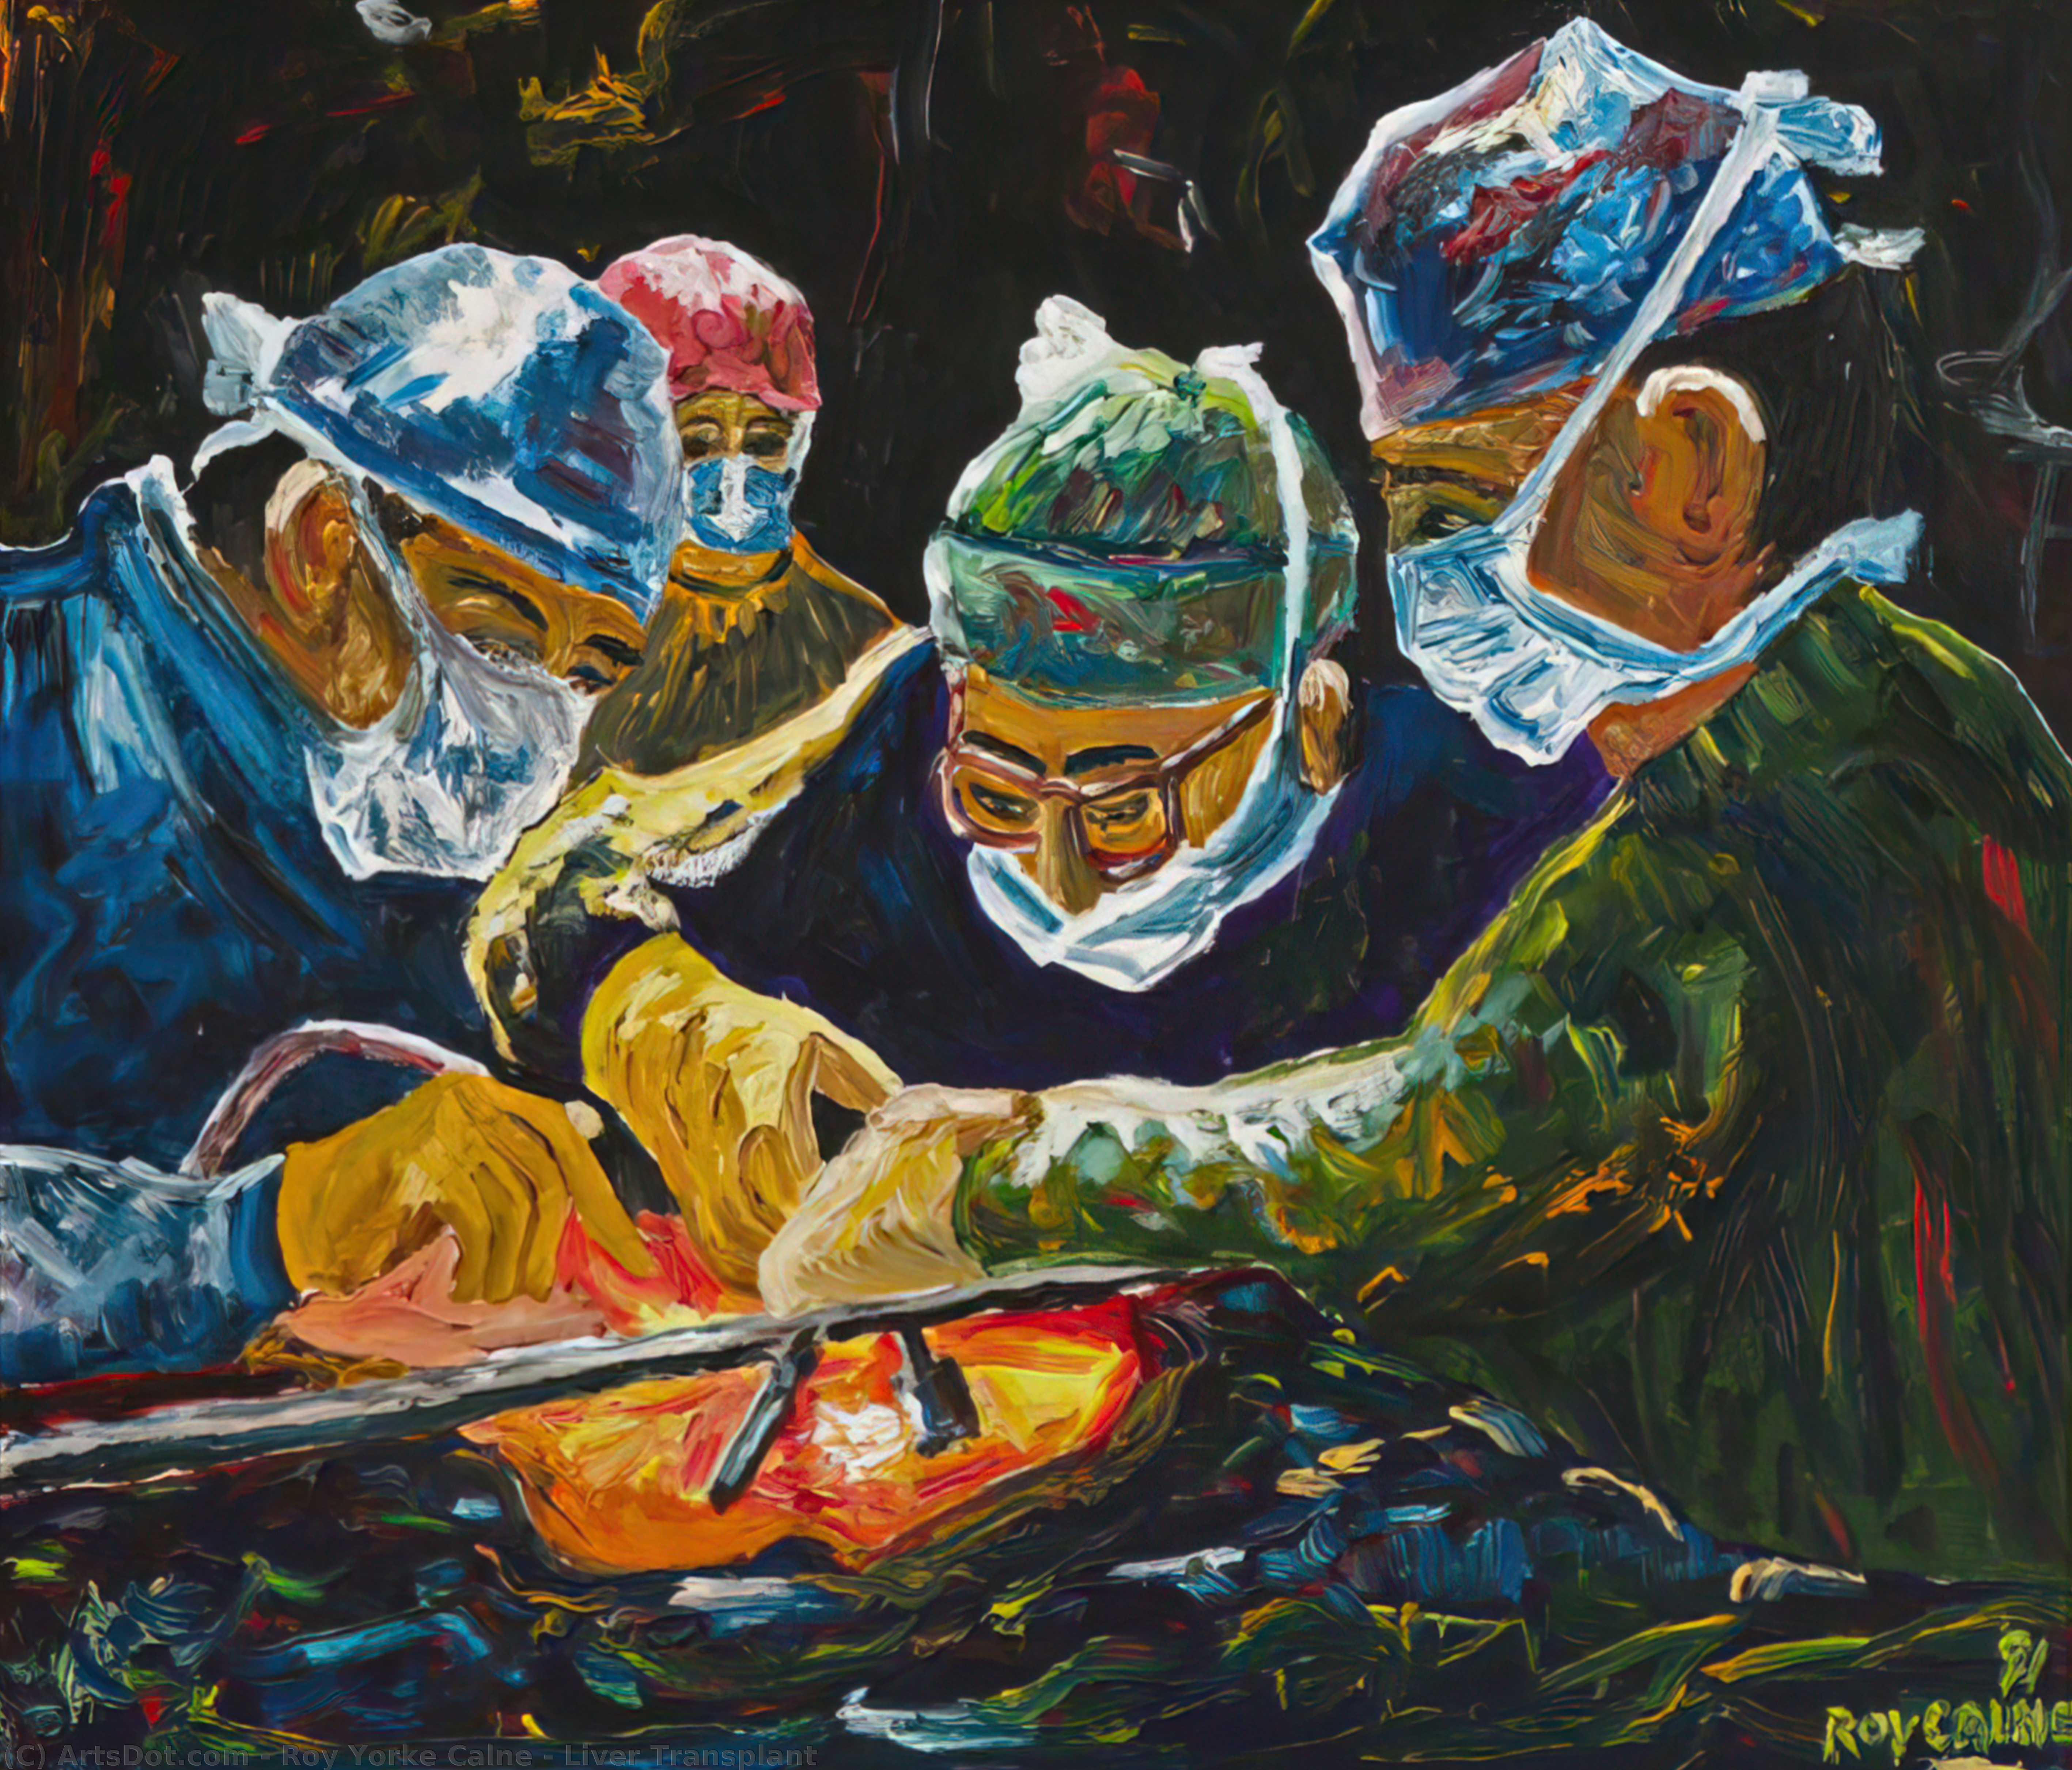 Wikoo.org - موسوعة الفنون الجميلة - اللوحة، العمل الفني Roy Yorke Calne - Liver Transplant